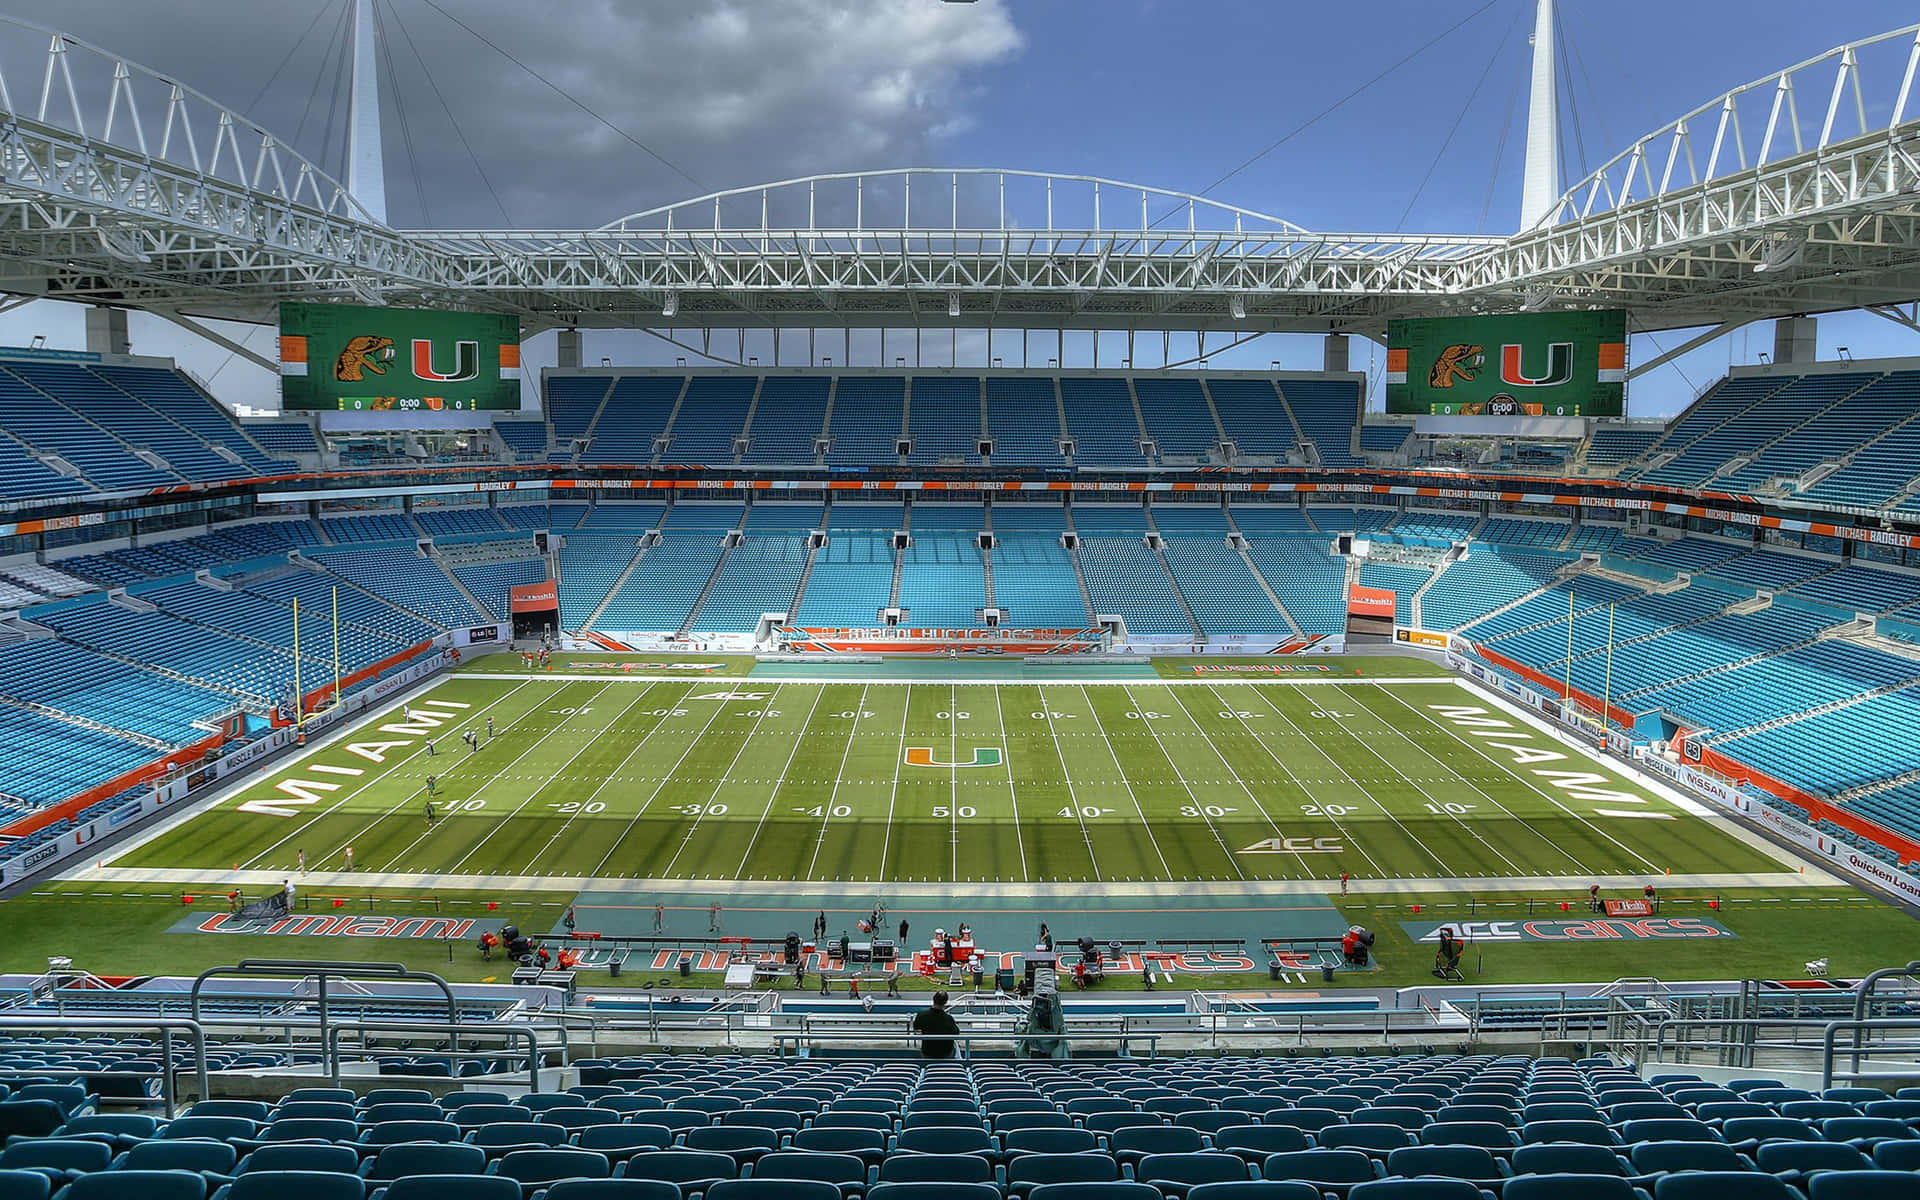 A Stadium With Seats